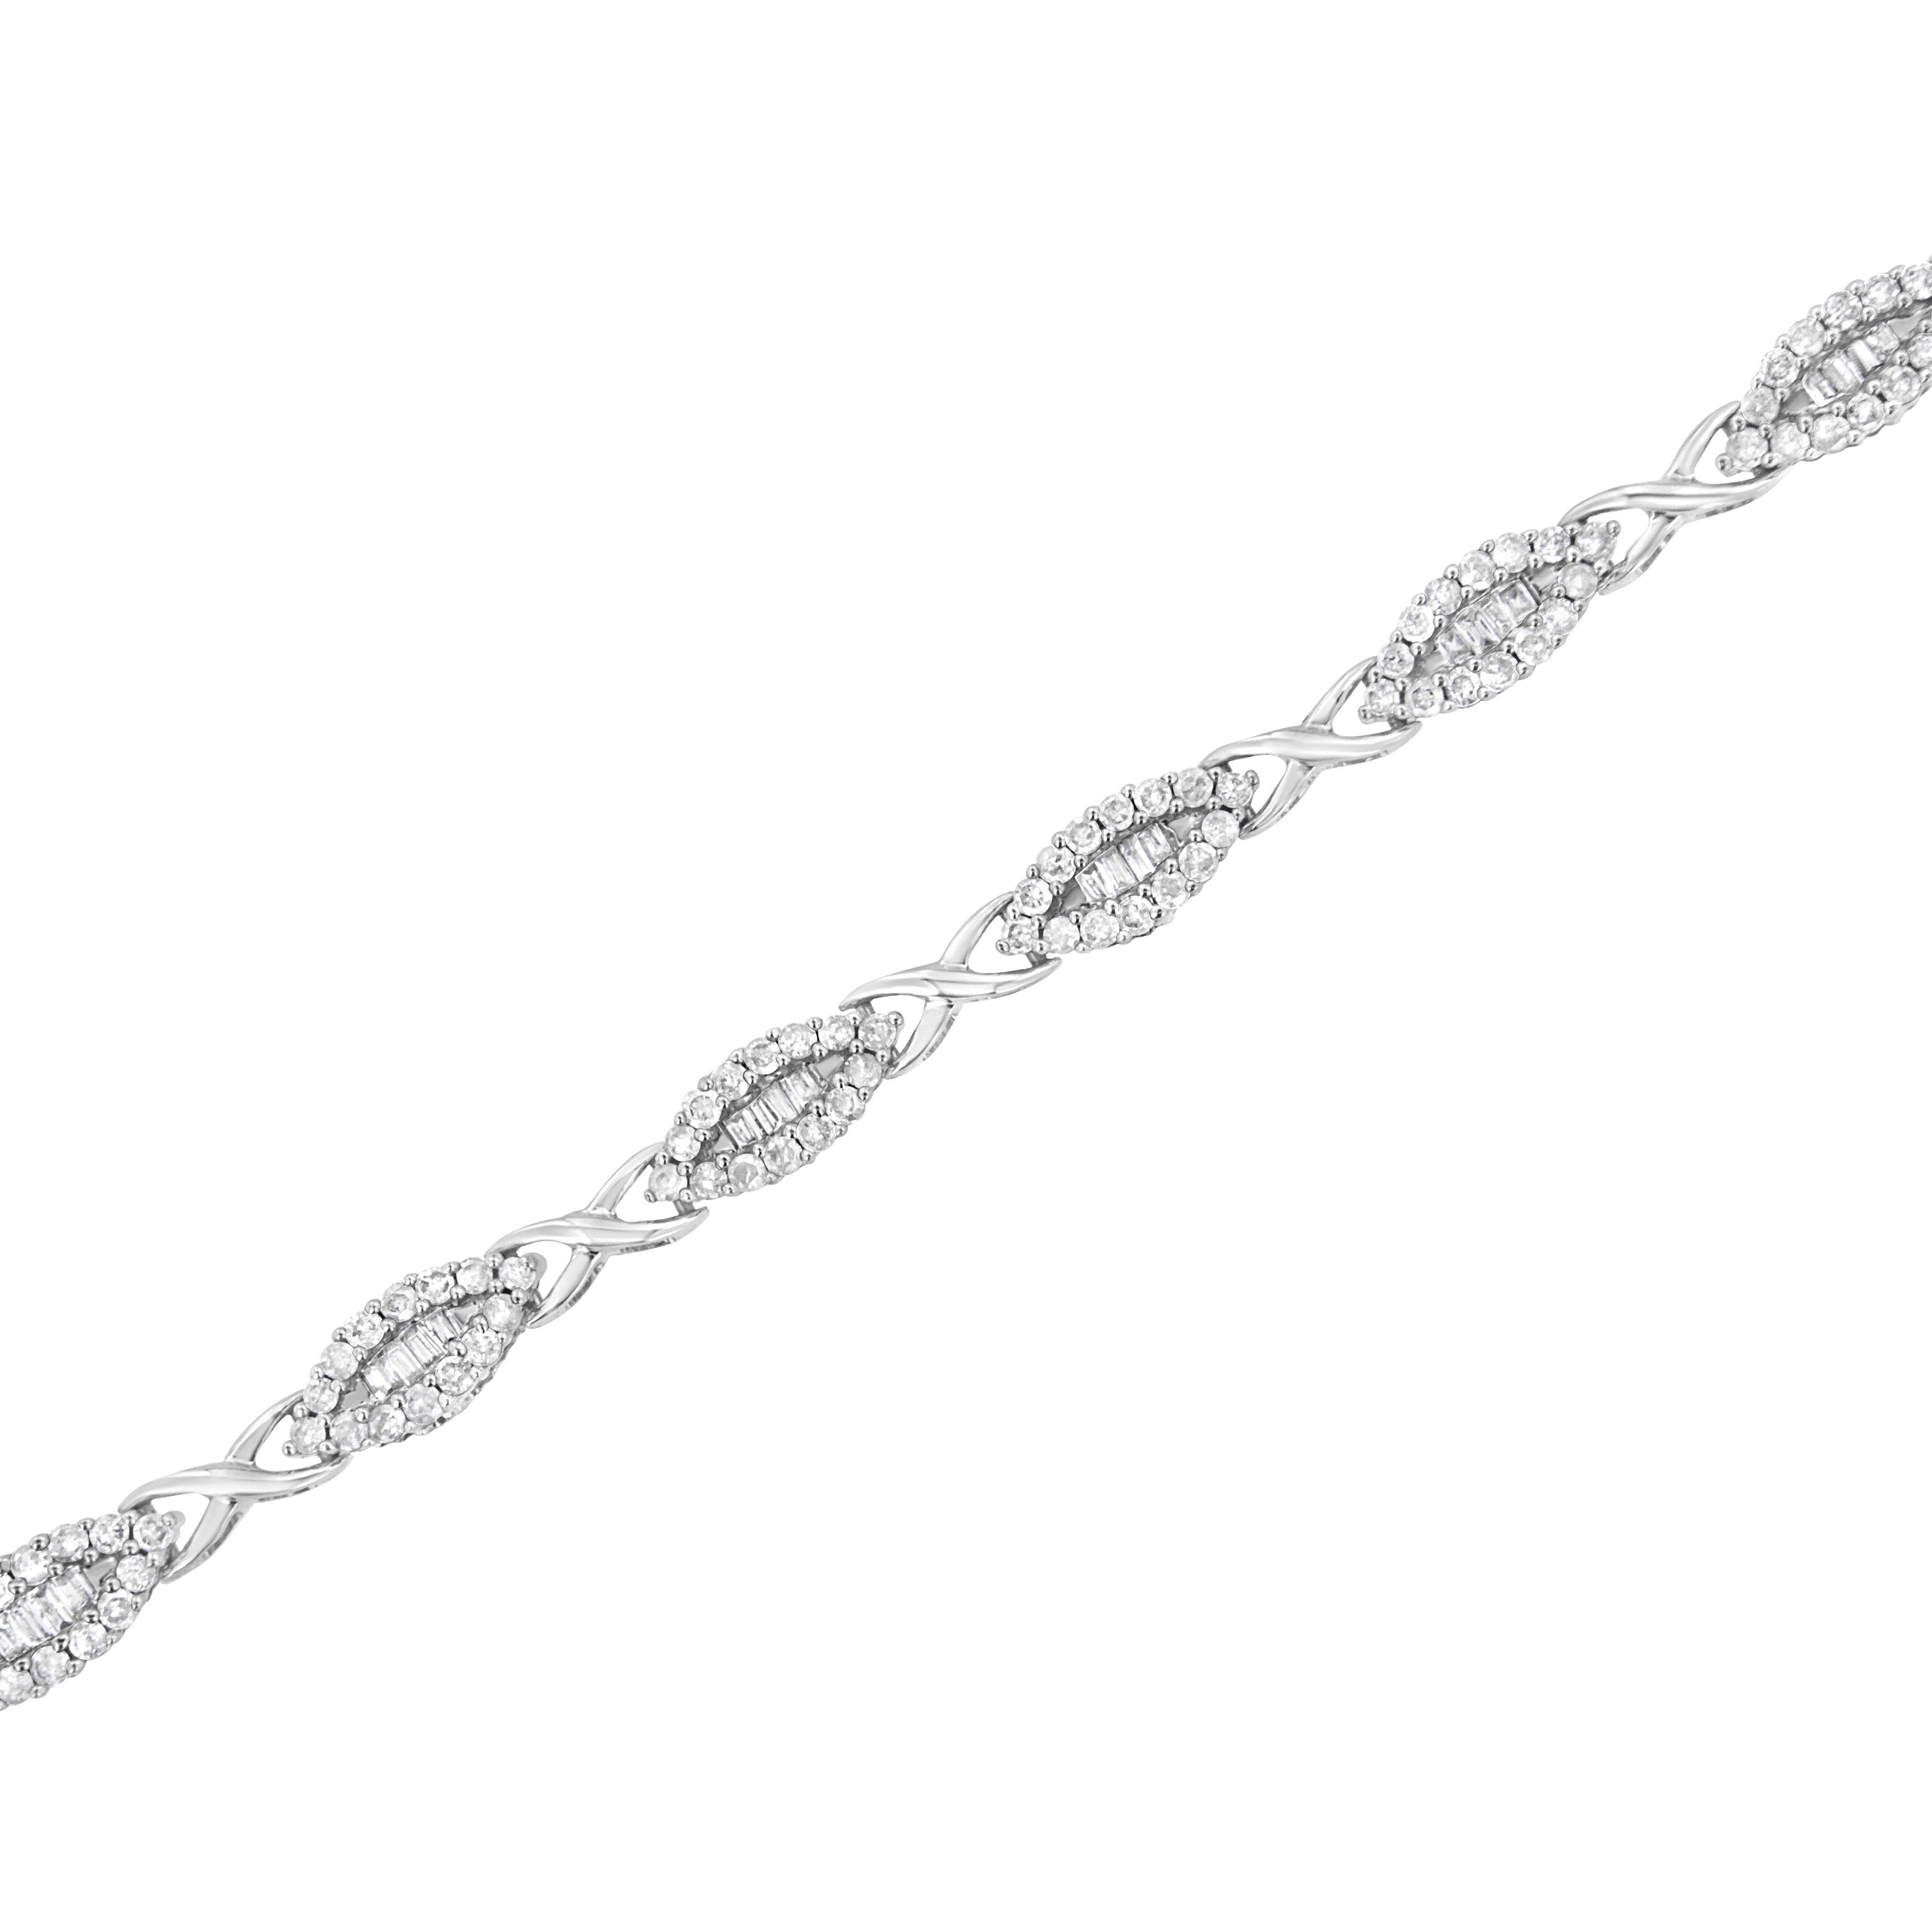 10k diamond tennis bracelet